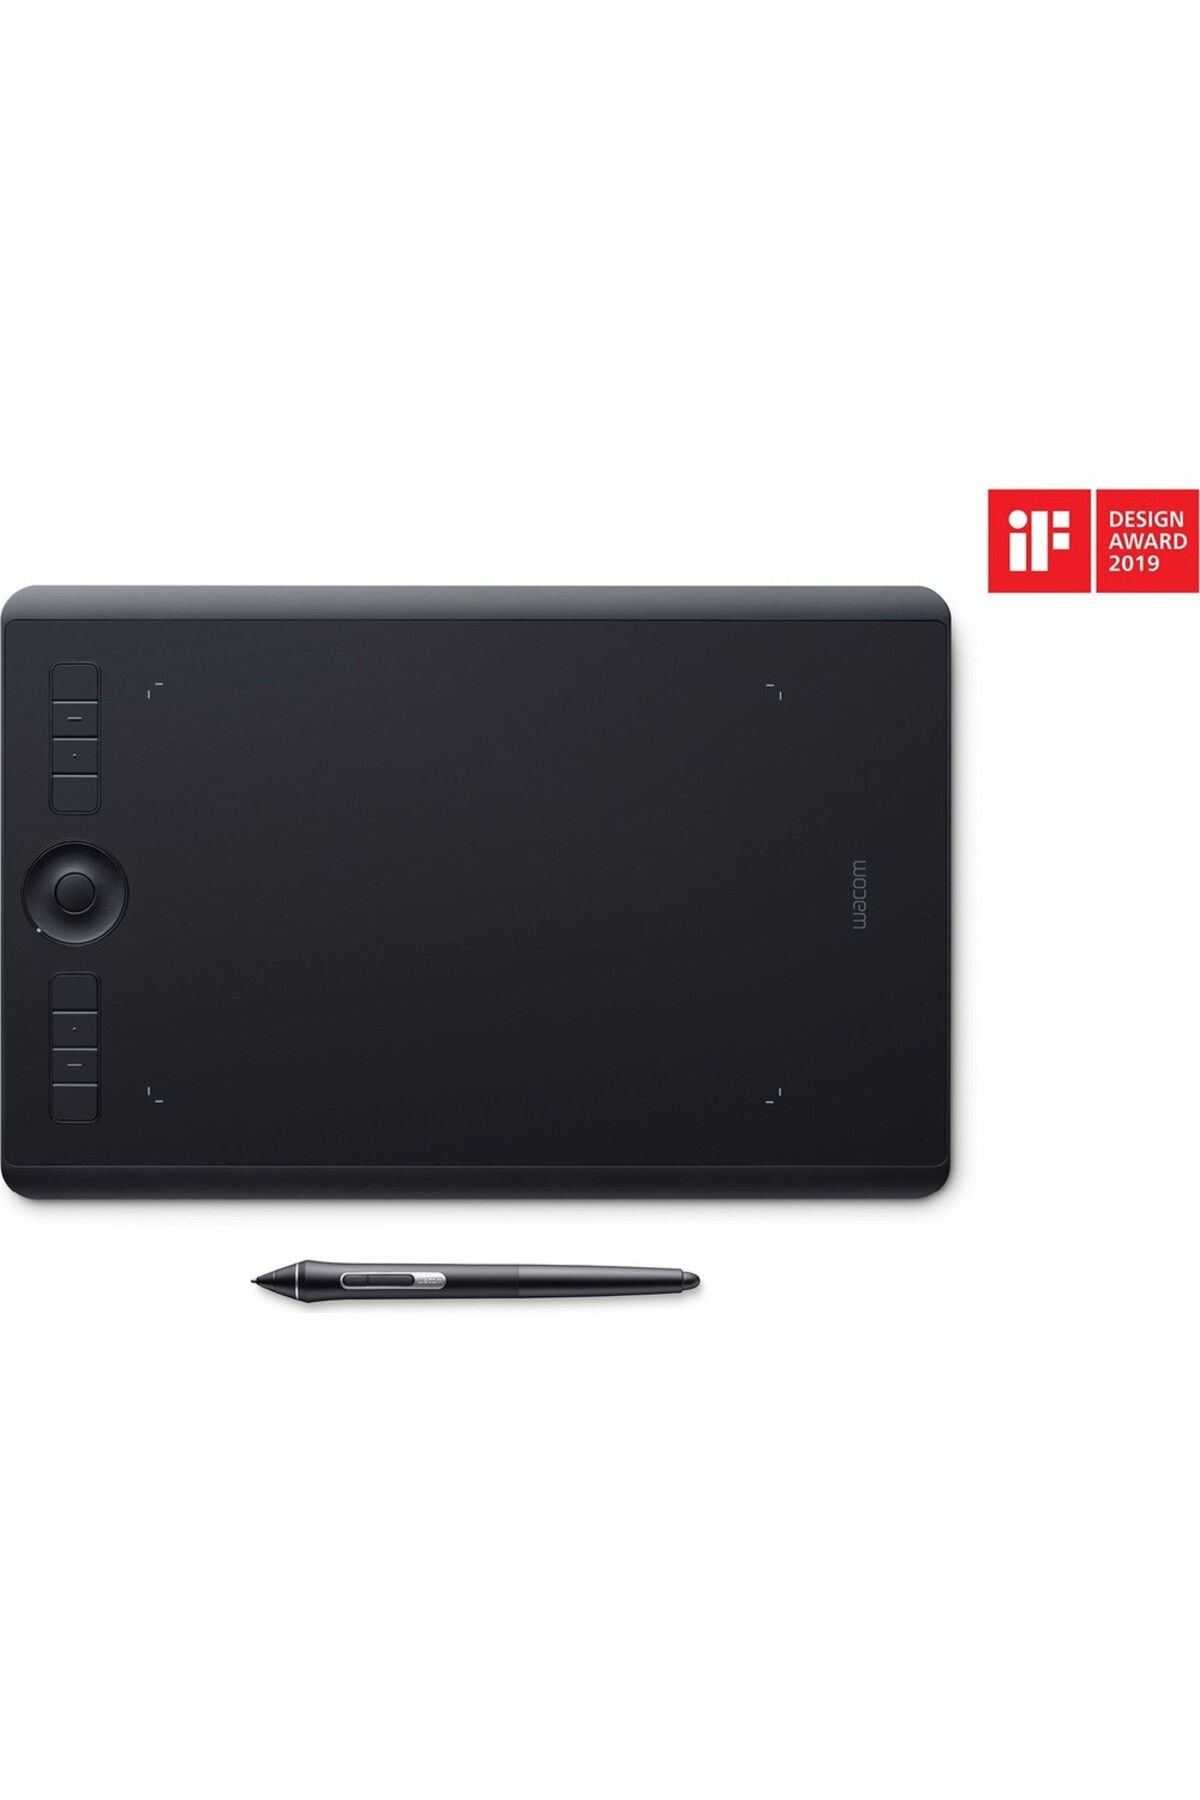 Wacom Intuos Pro Medium 8192 Seviye Bluetooth Grafik Tablet (PTH-660)